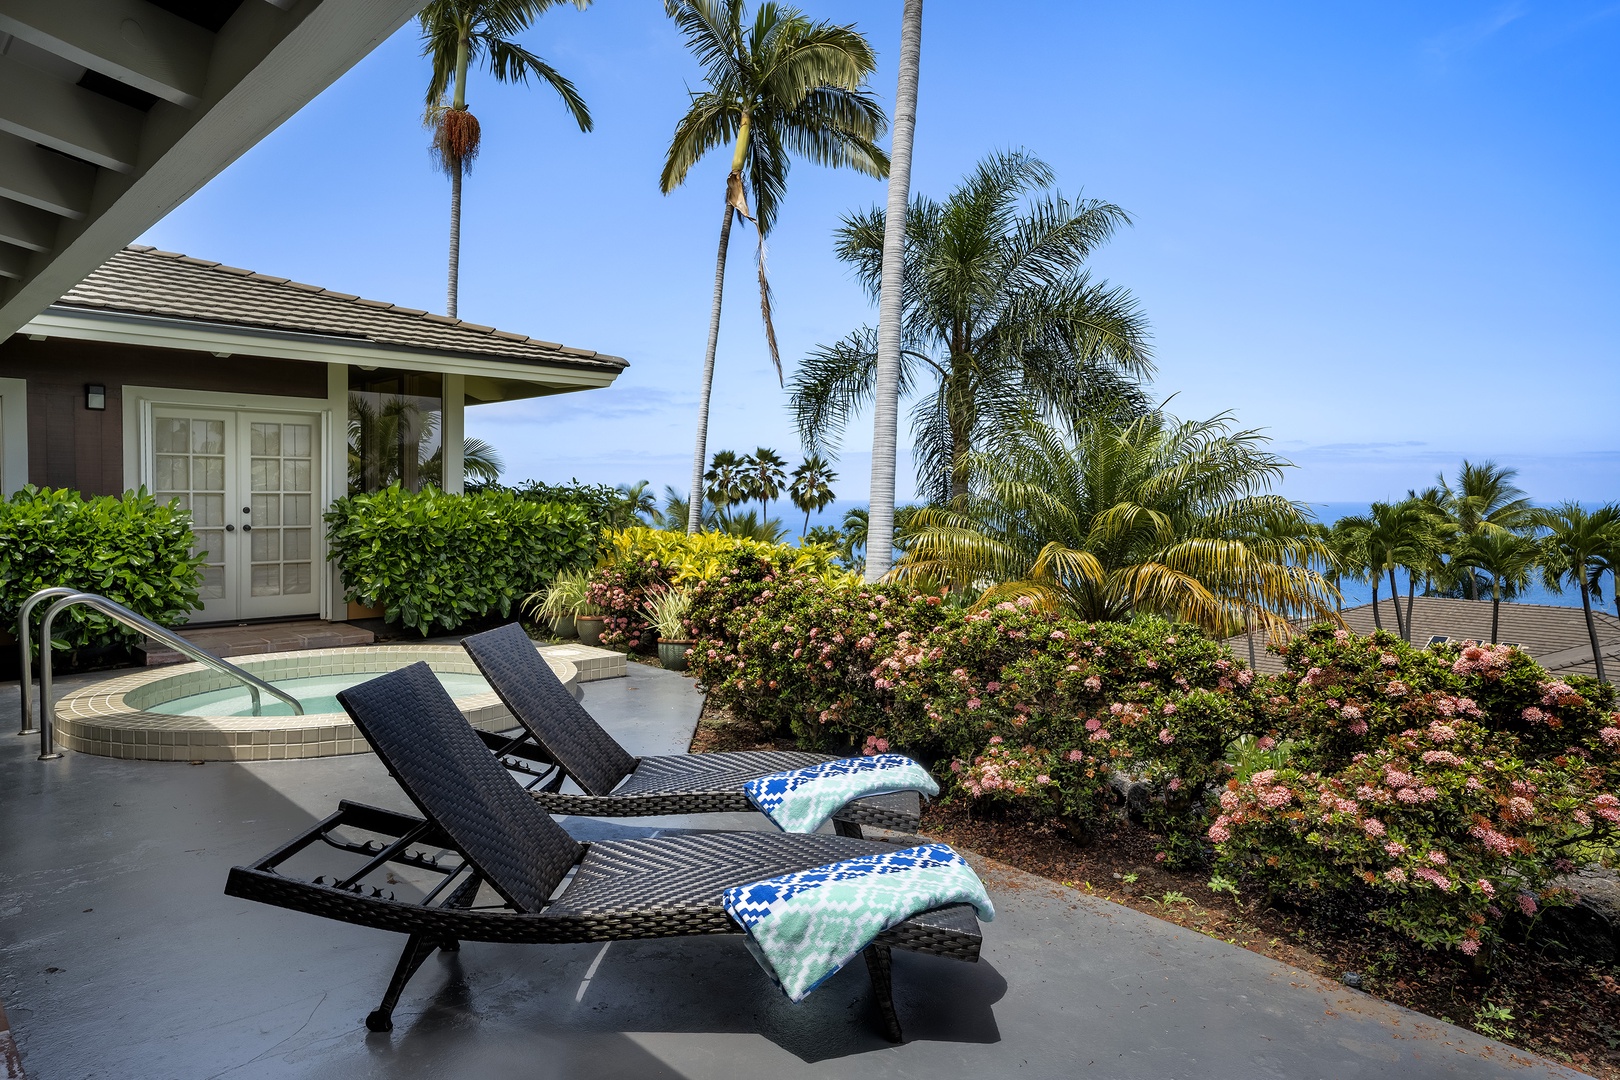 Kailua Kona Vacation Rentals, Pineapple House - Soak in the Kona sun!